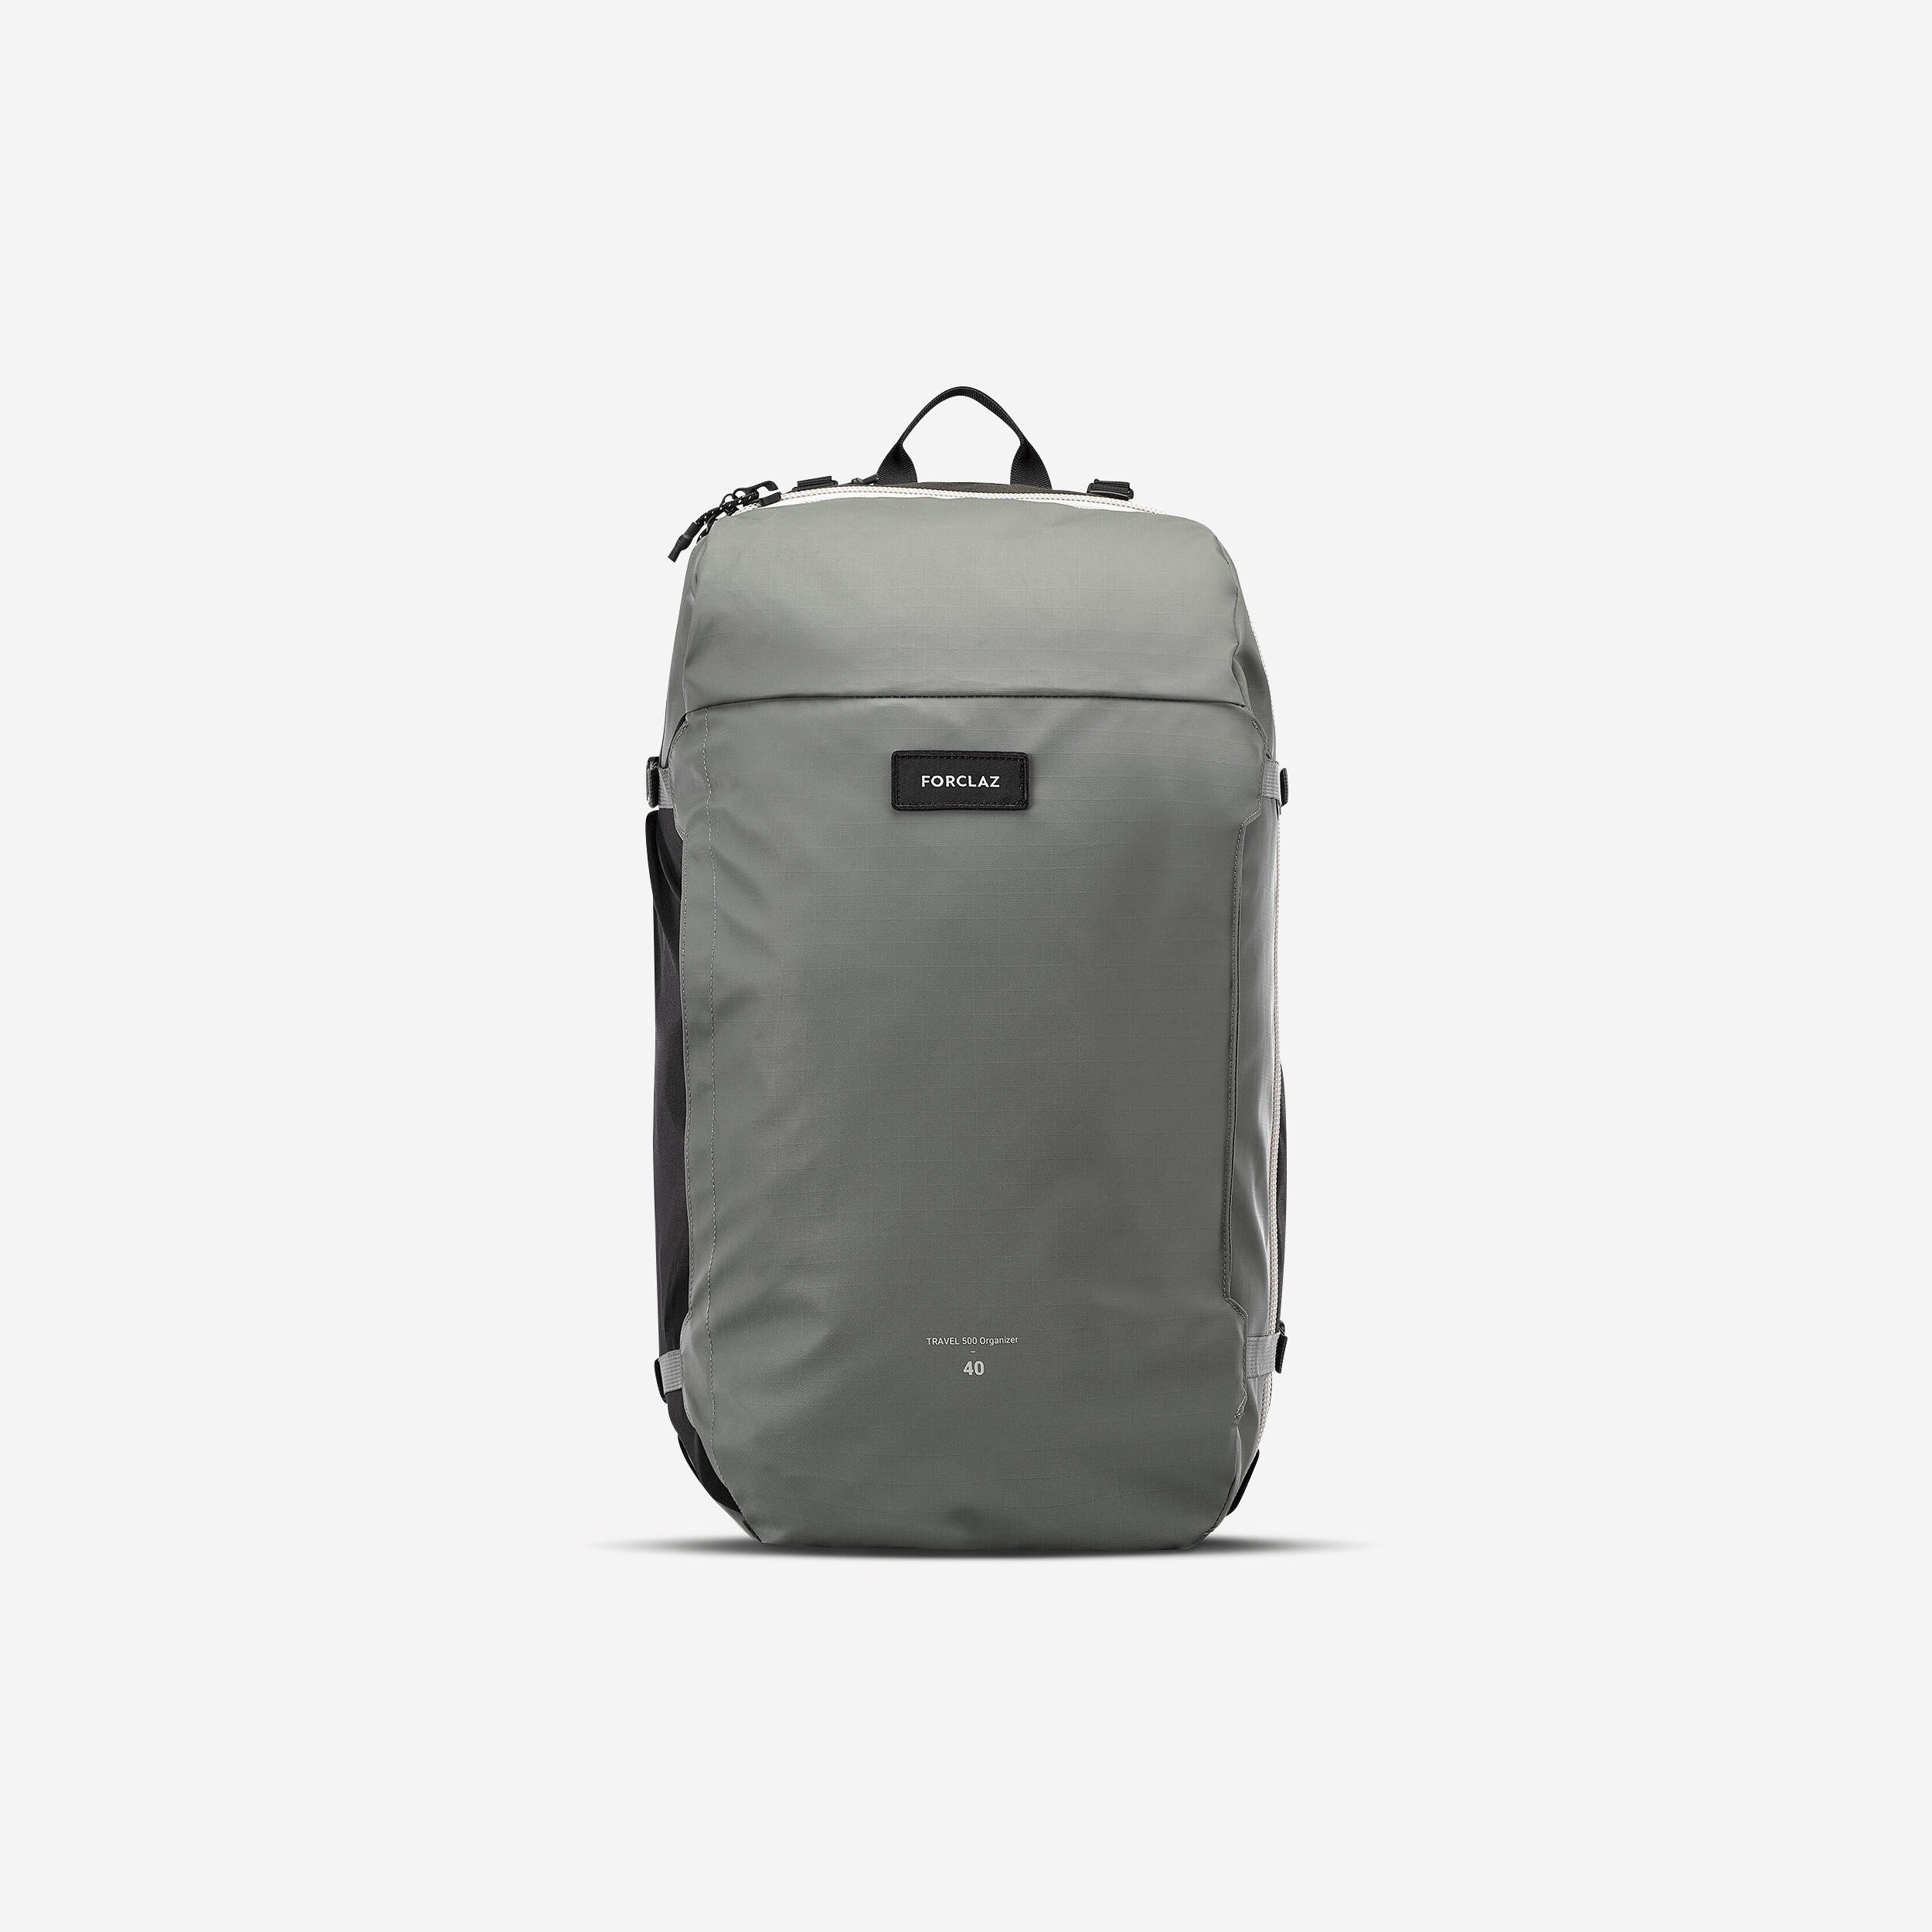 FORCLAZ Travel Backpack 40 L - Travel 500 ORGANIZER Khaki